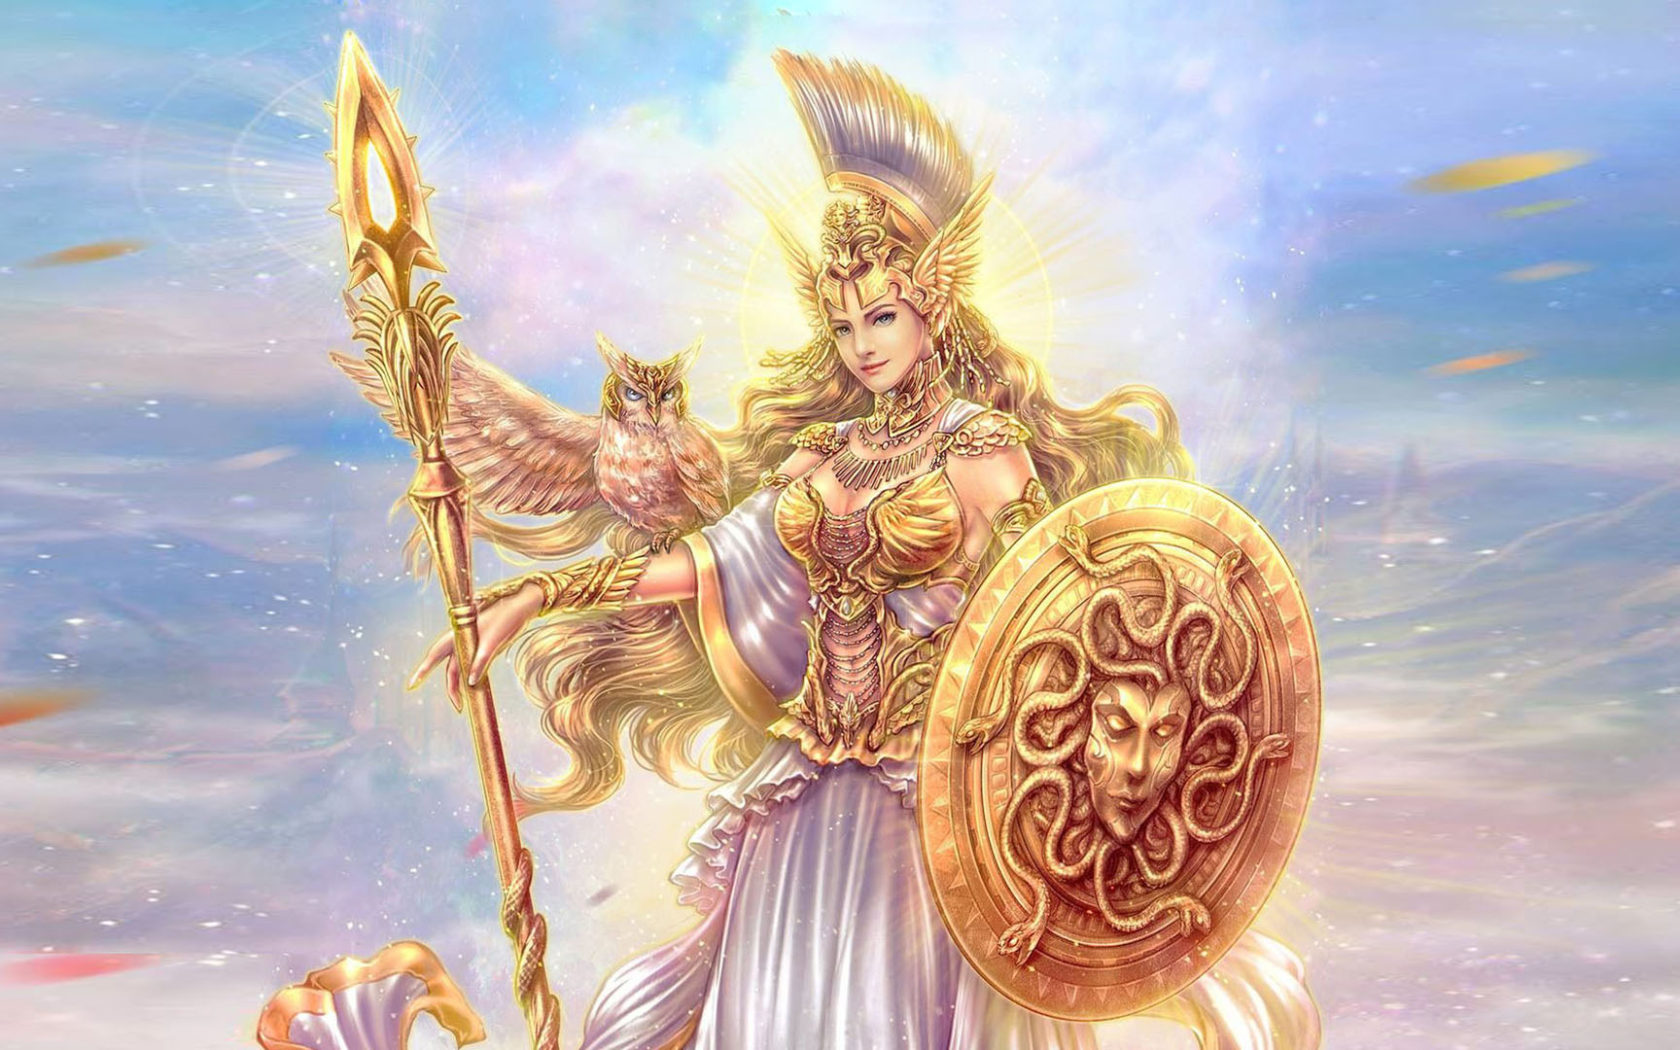 Athena the goddess of war fantasy art desktop hd wallpaper for pc tablet and mobile download